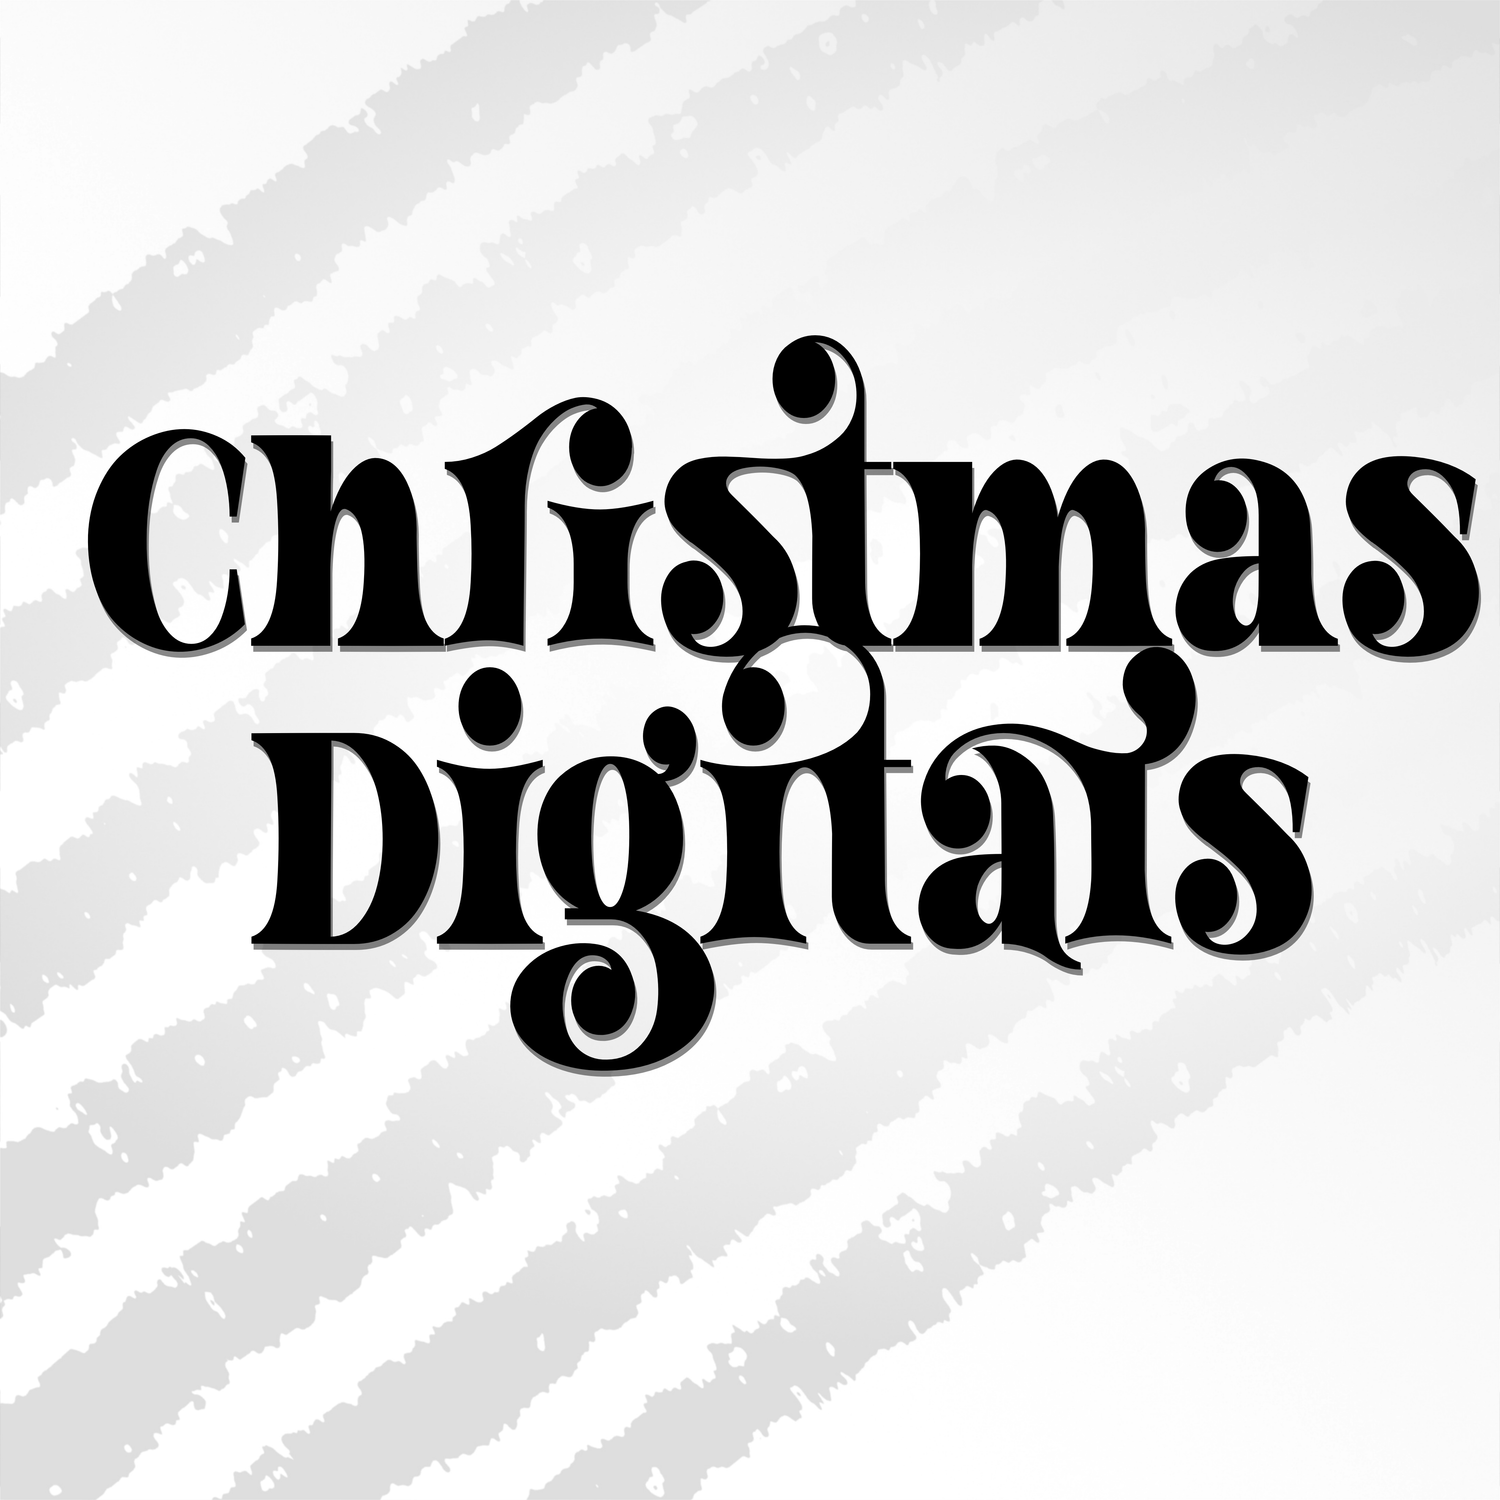 Christmas Digitals SHOP HERE